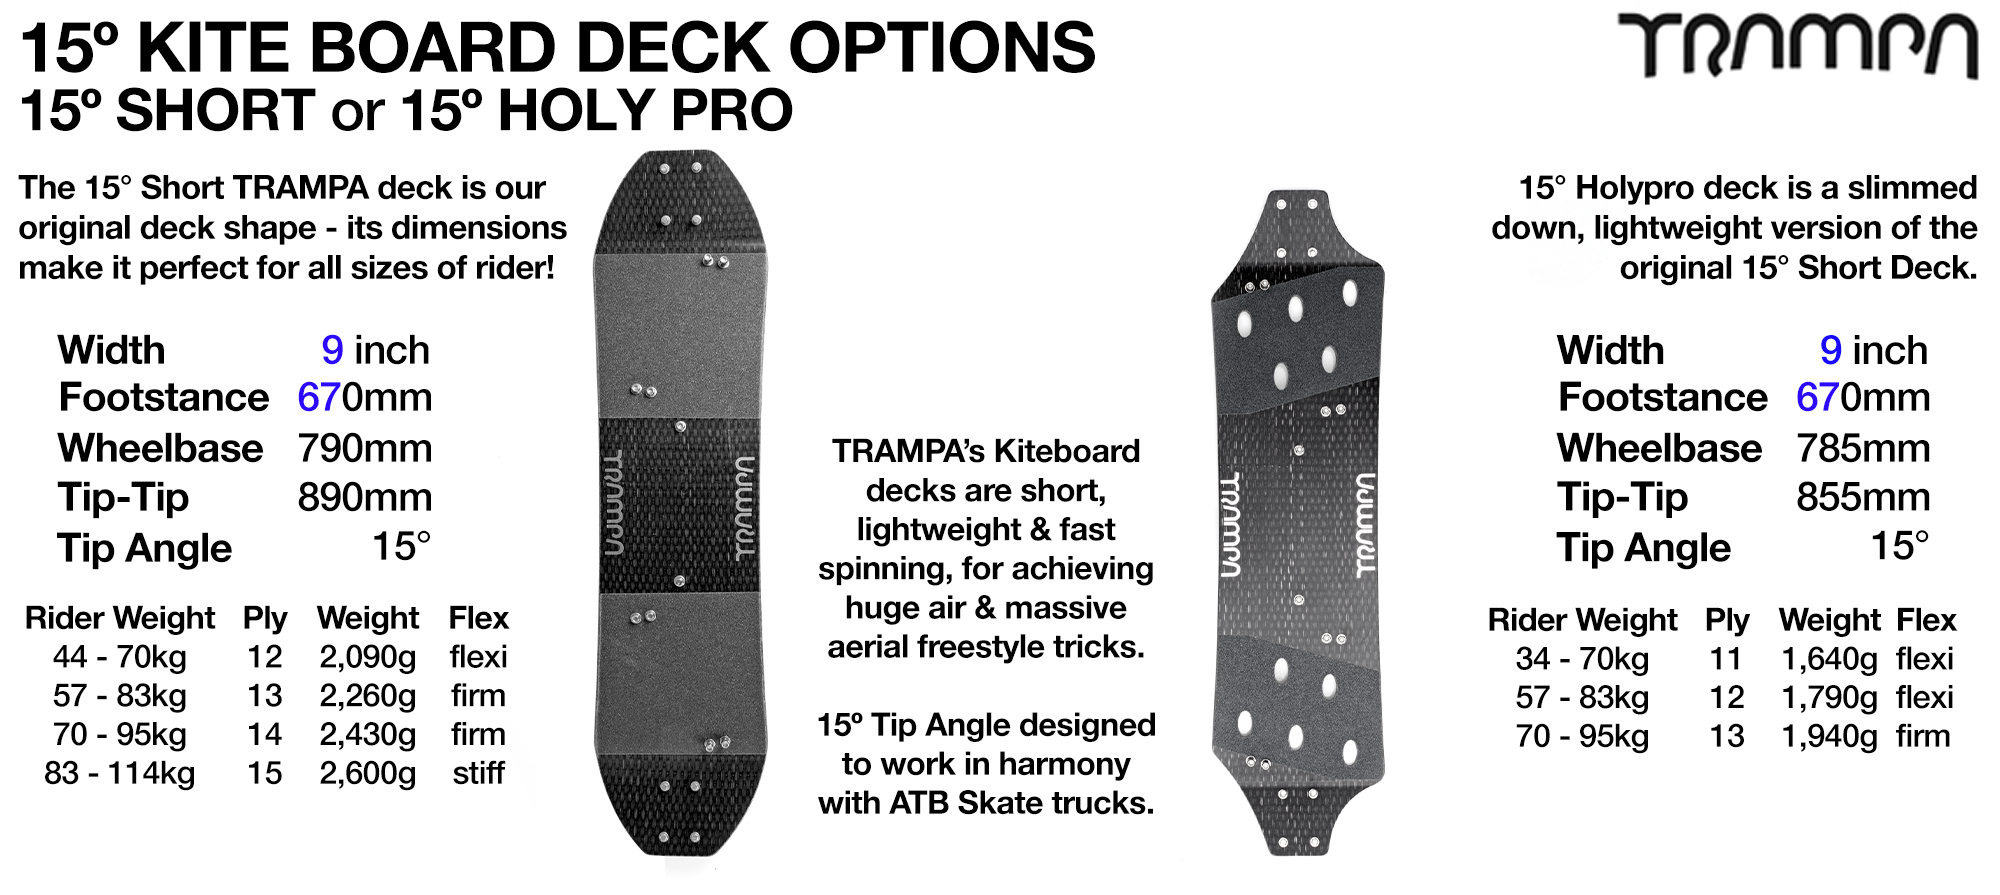 15º TRAMPA Kiteboard BLANK Decks for Skate Trucks